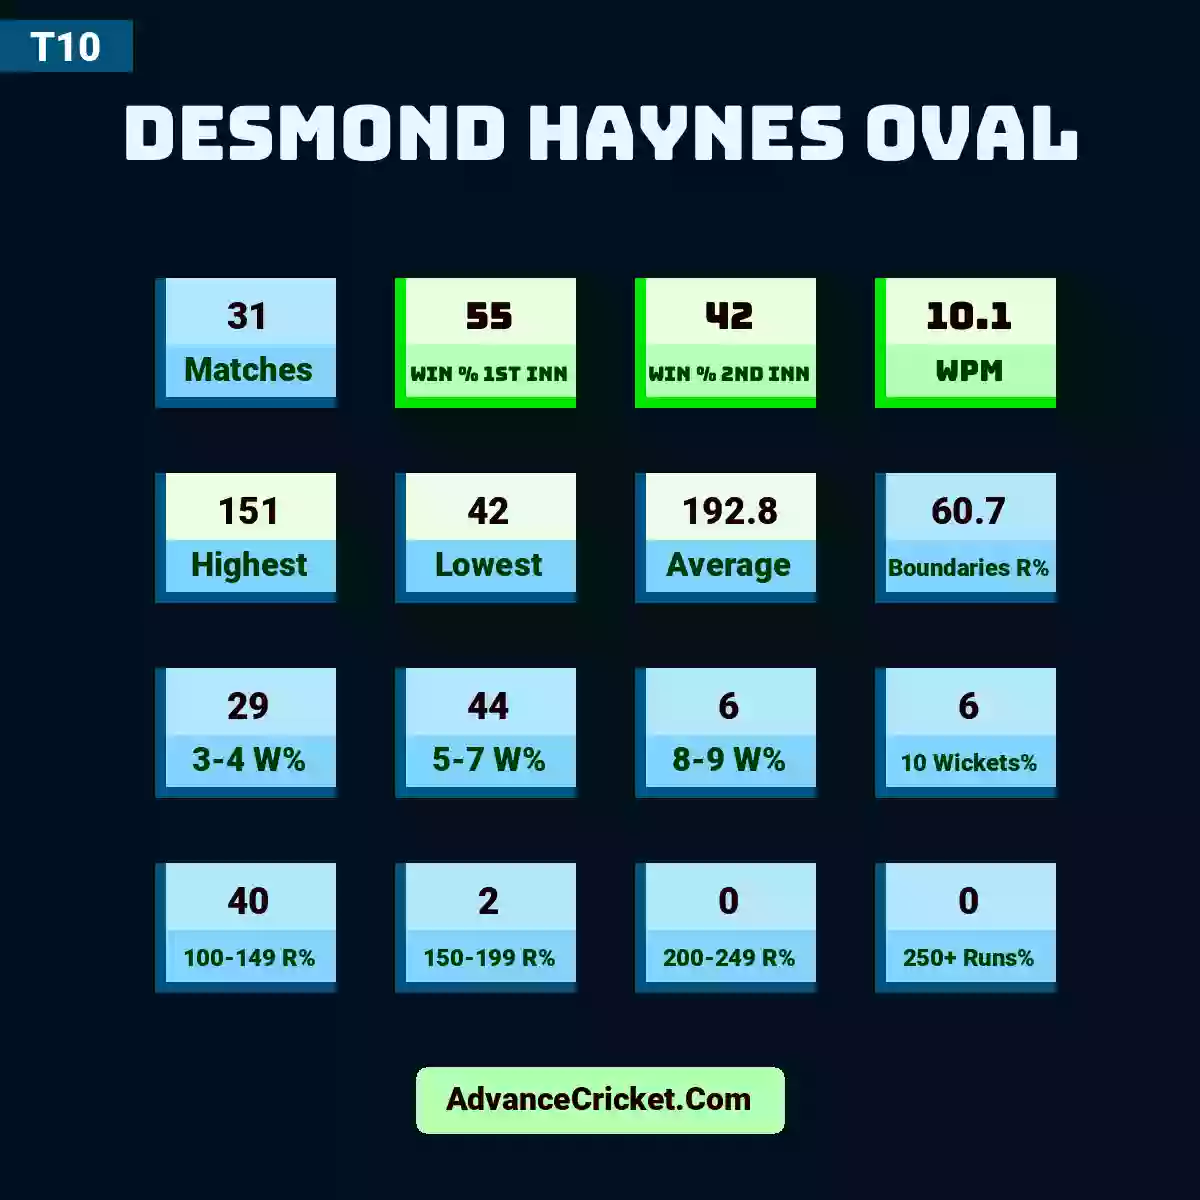 Image showing Desmond Haynes Oval with Matches: 31, Win % 1st Inn: 55, Win % 2nd Inn: 42, WPM: 10.1, Highest: 151, Lowest: 42, Average: 192.8, Boundaries R%: 60.7, 3-4 W%: 29, 5-7 W%: 44, 8-9 W%: 6, 10 Wickets%: 6, 100-149 R%: 40, 150-199 R%: 2, 200-249 R%: 0, 250+ Runs%: 0.